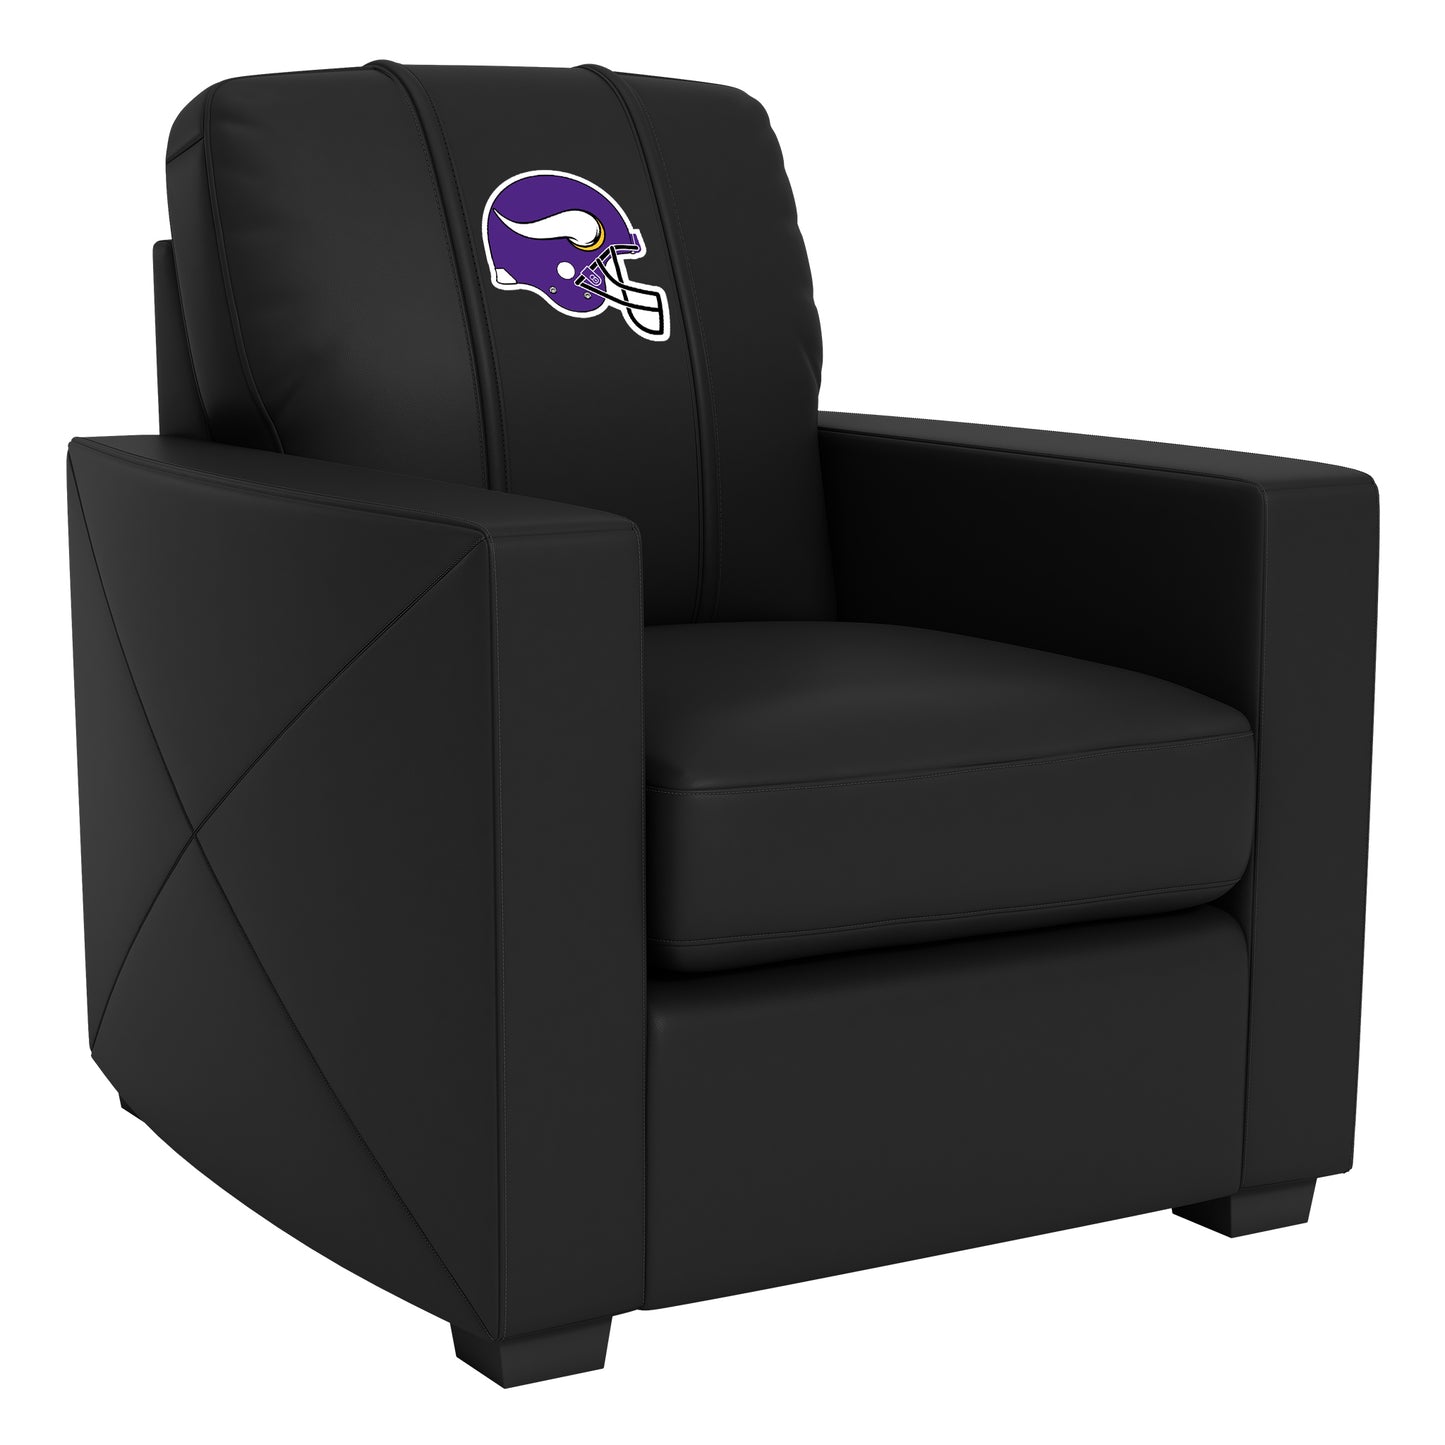 Silver Club Chair with  Minnesota Vikings Helmet Logo